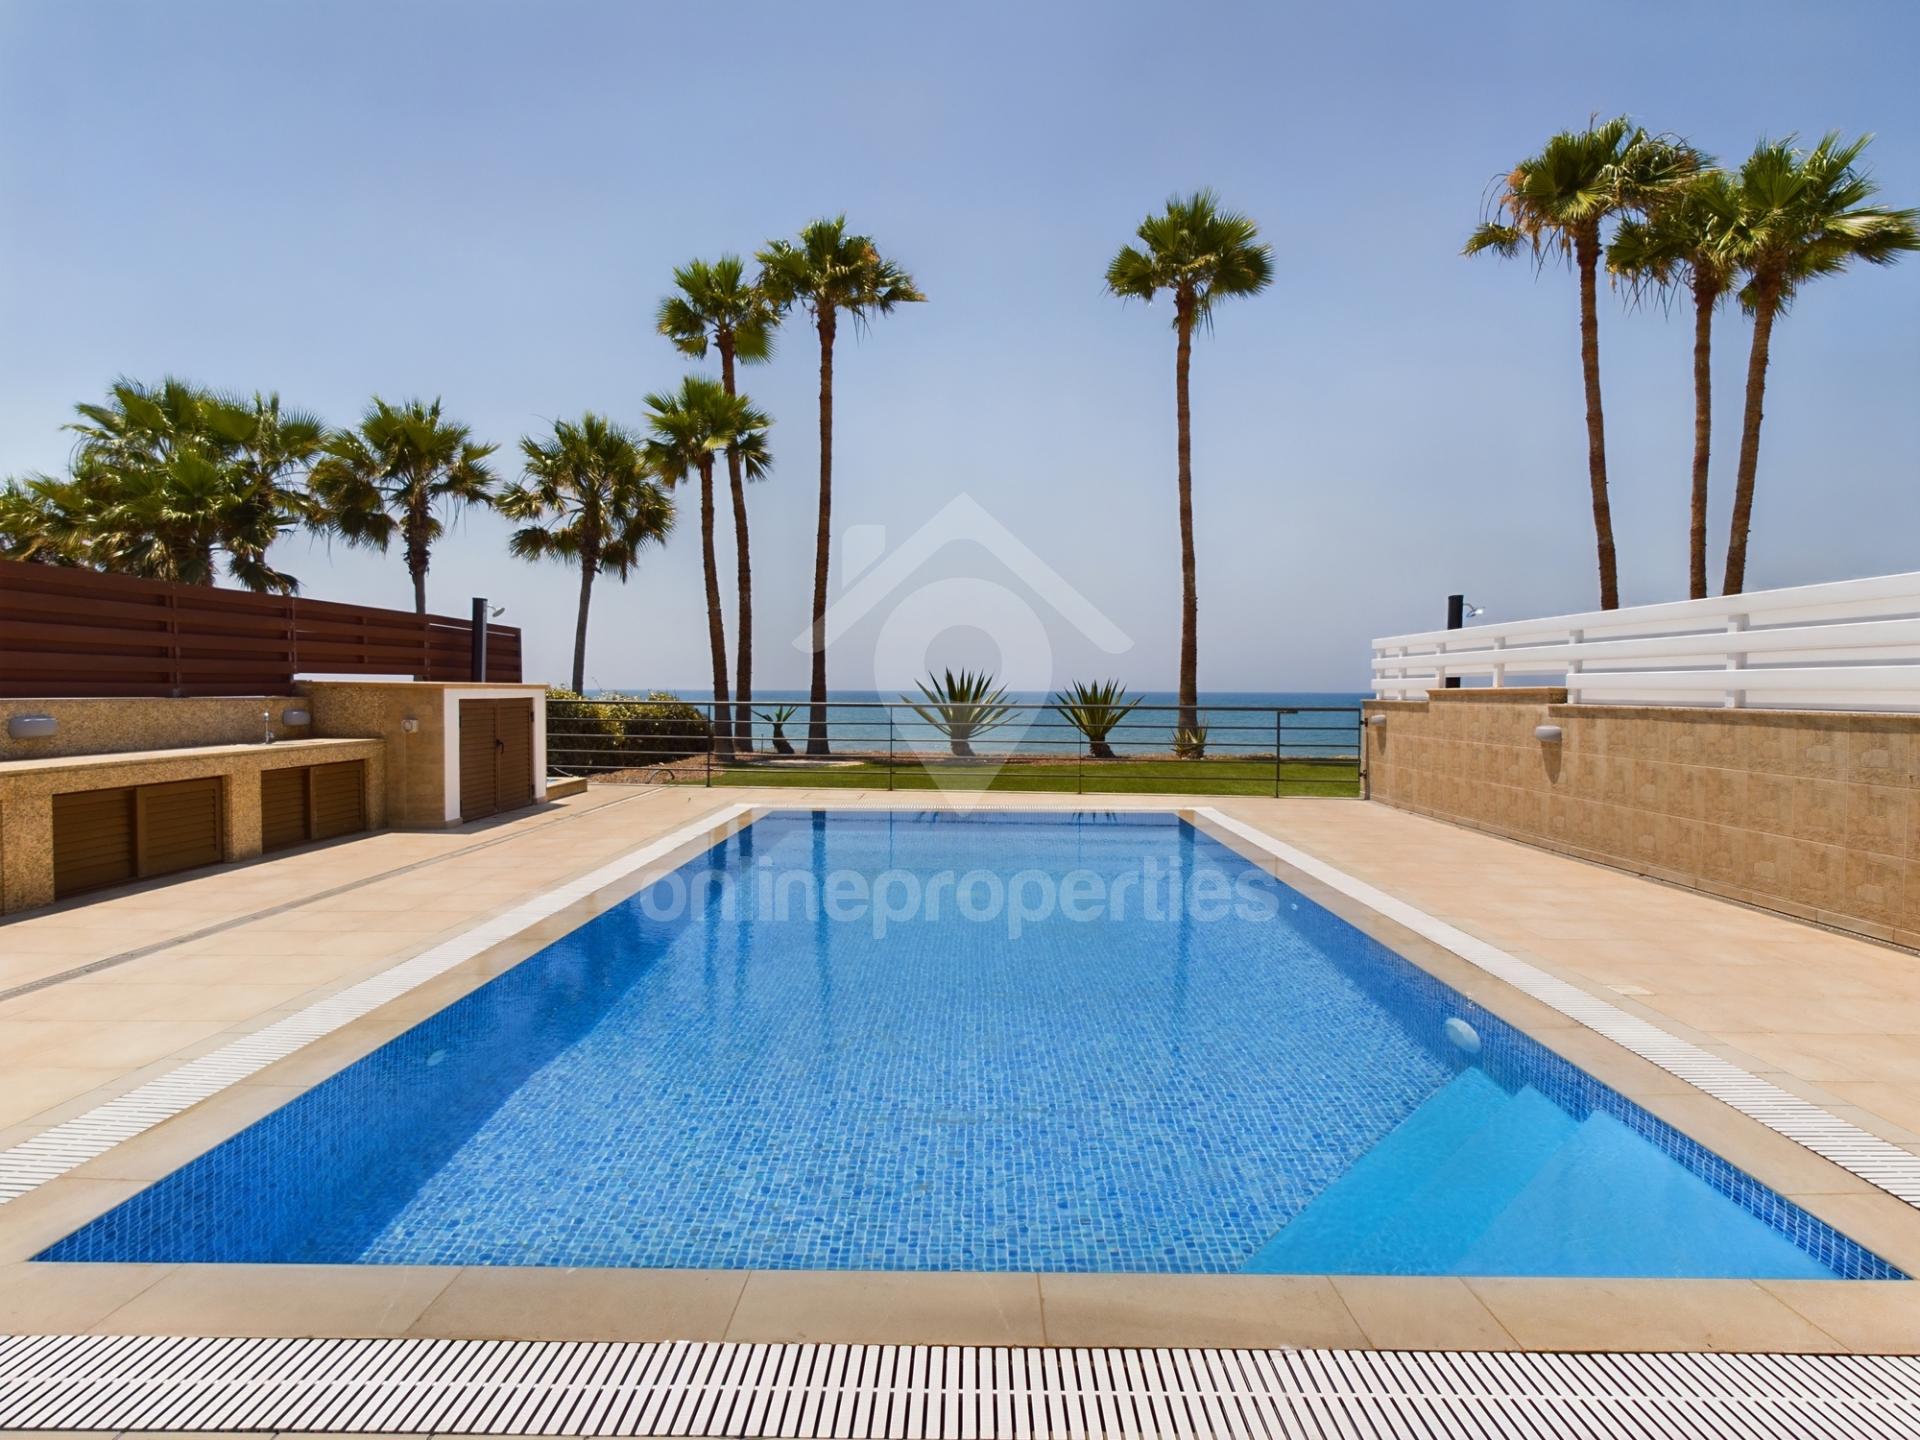 Amazing frontline beach villa with pool